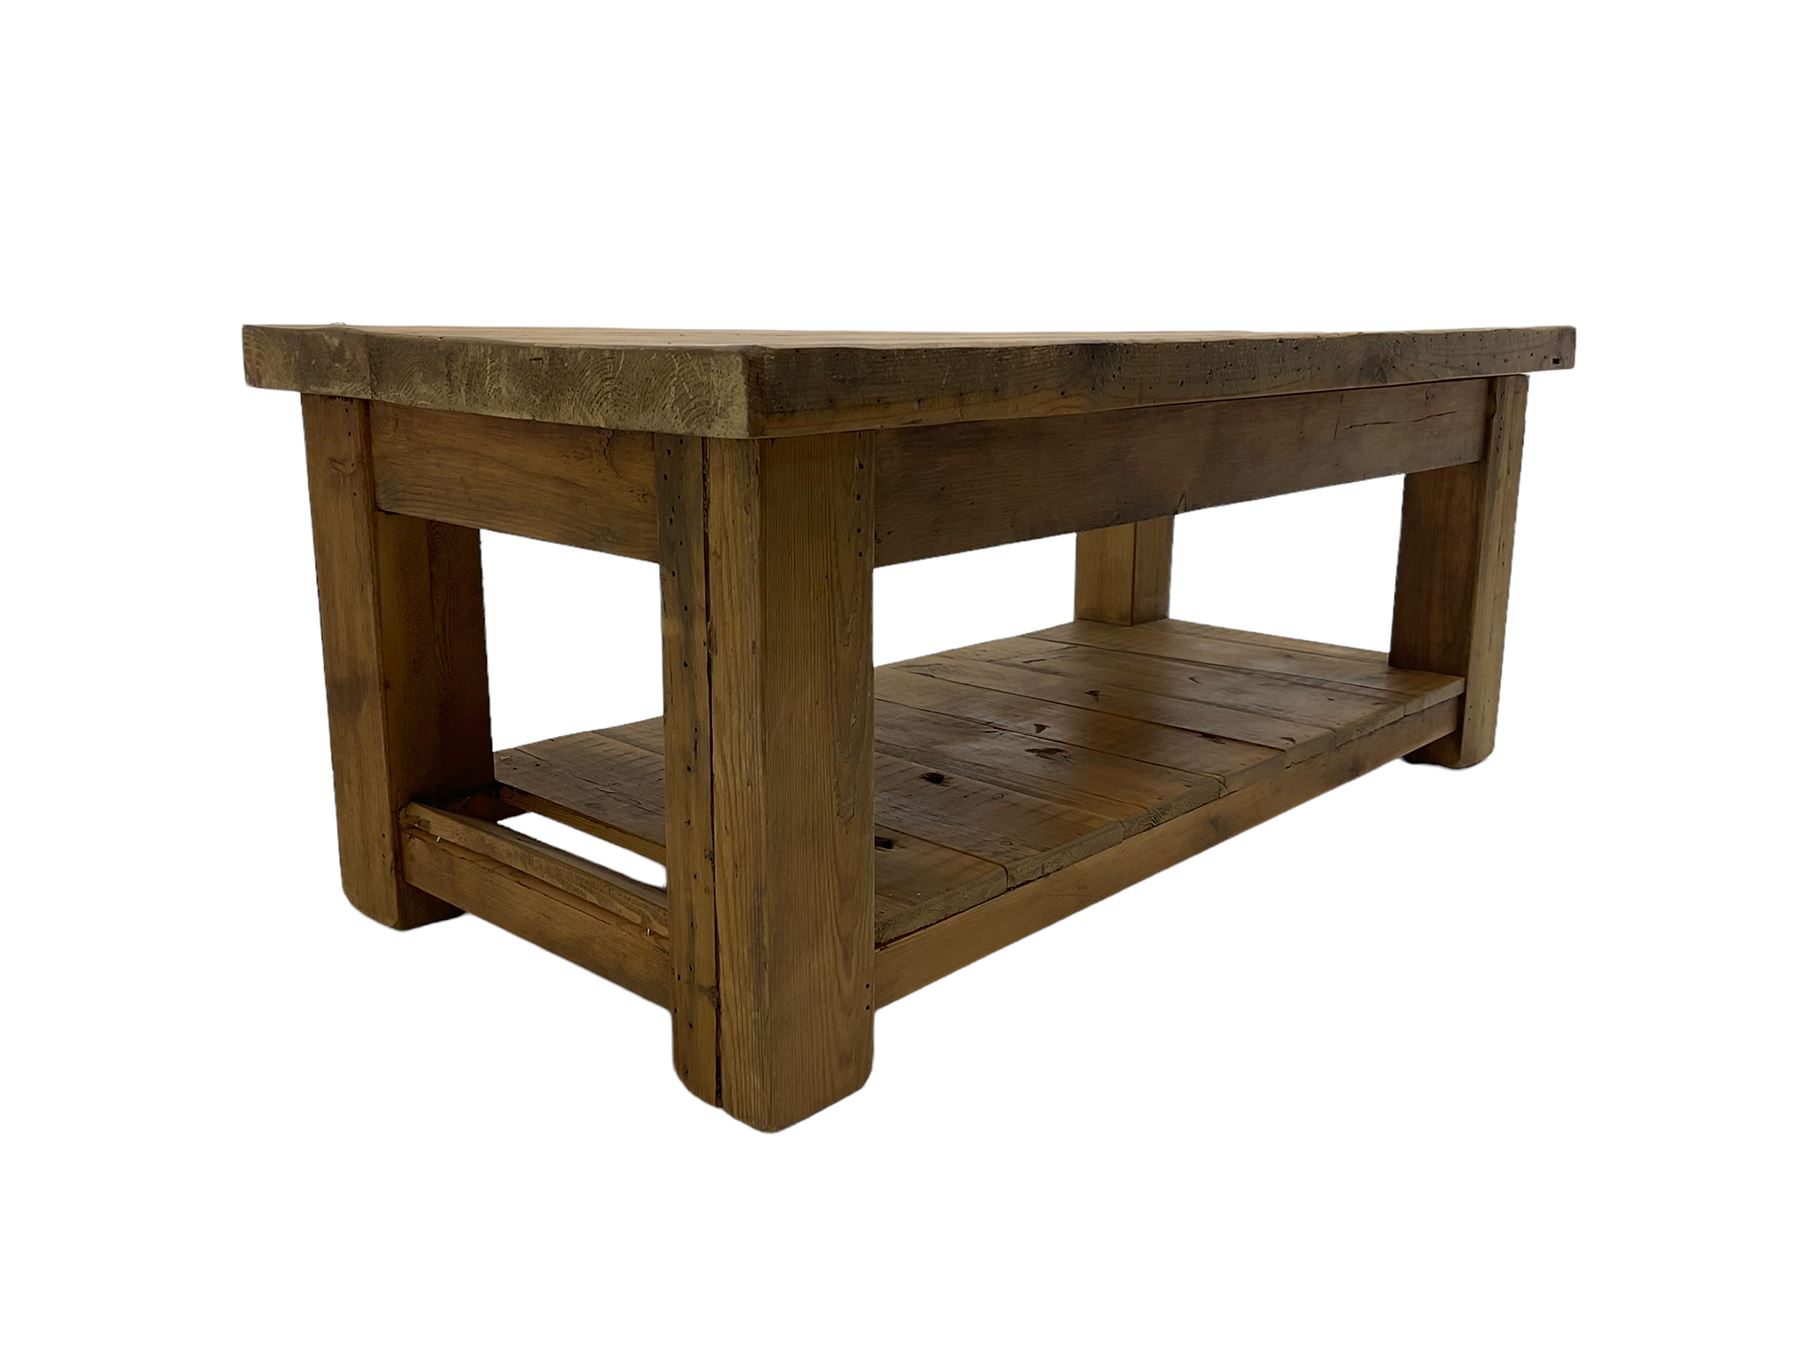 Reclaimed pine rectangular coffee table - Image 3 of 6